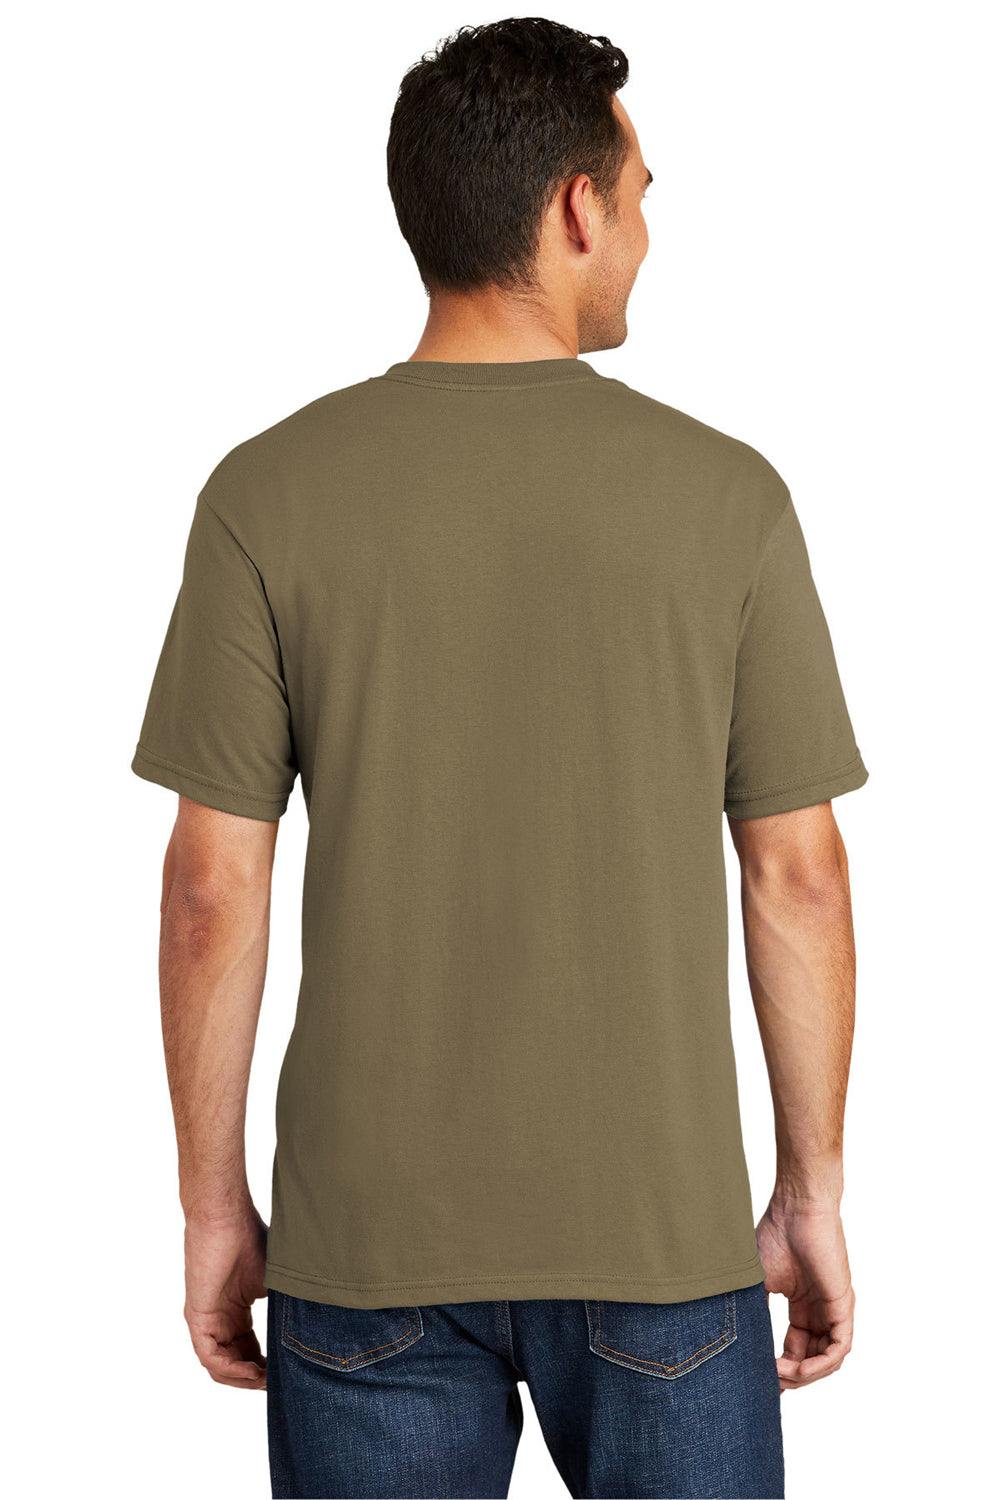 Port & Company USA100 Mens USA Made Short Sleeve Crewneck T-Shirt Coyote Brown Back